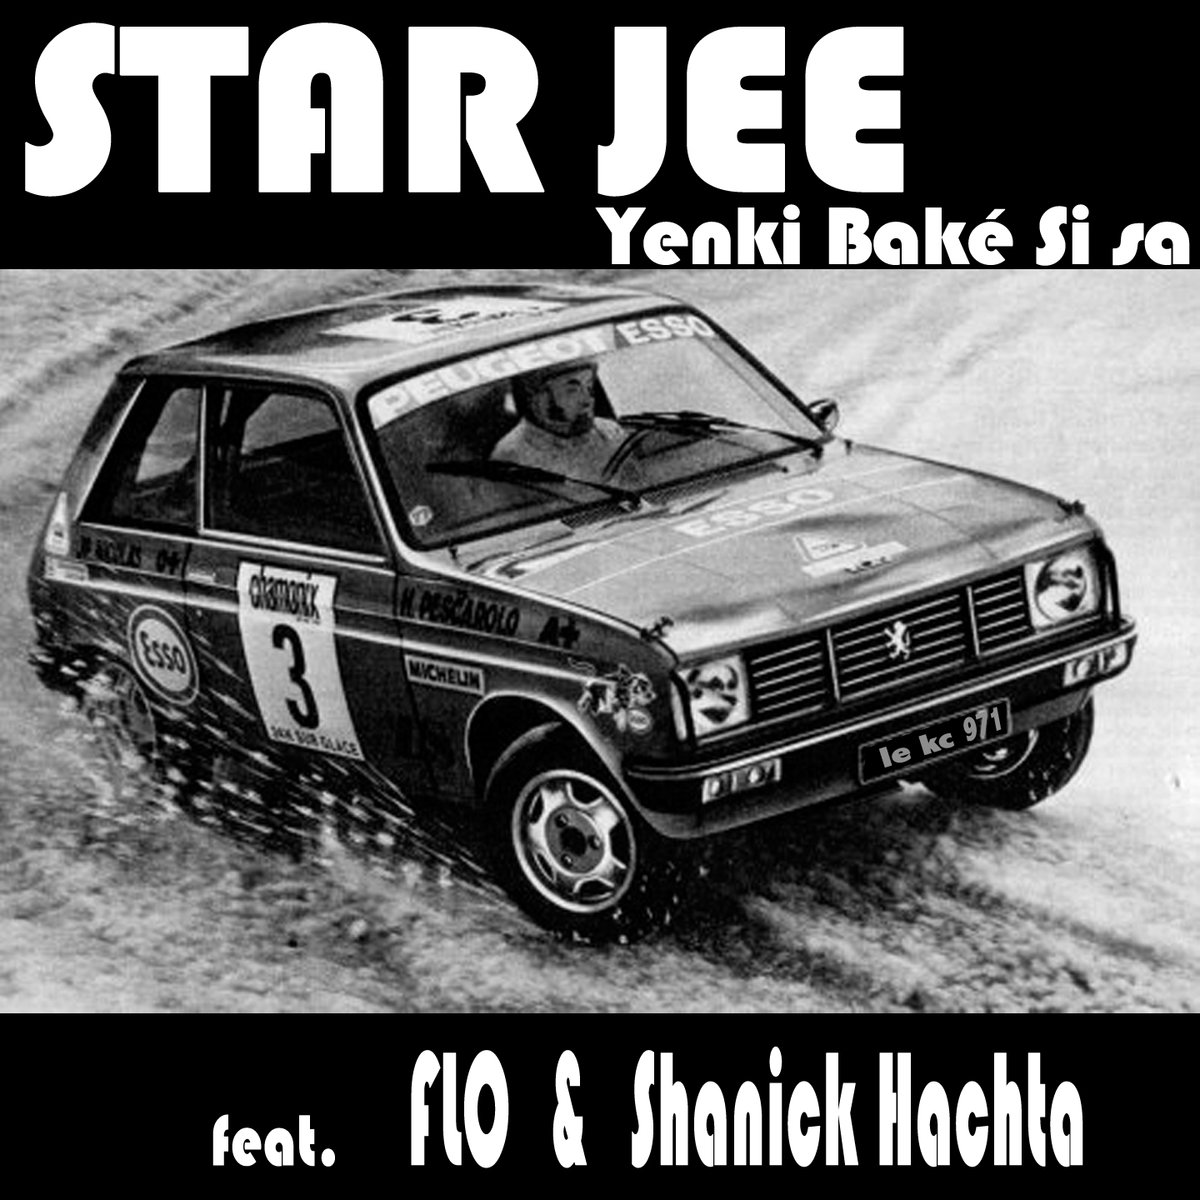 Star Jee - Yenki Baké Sa (ft. Flo and Shanick Hachta) (Cover)